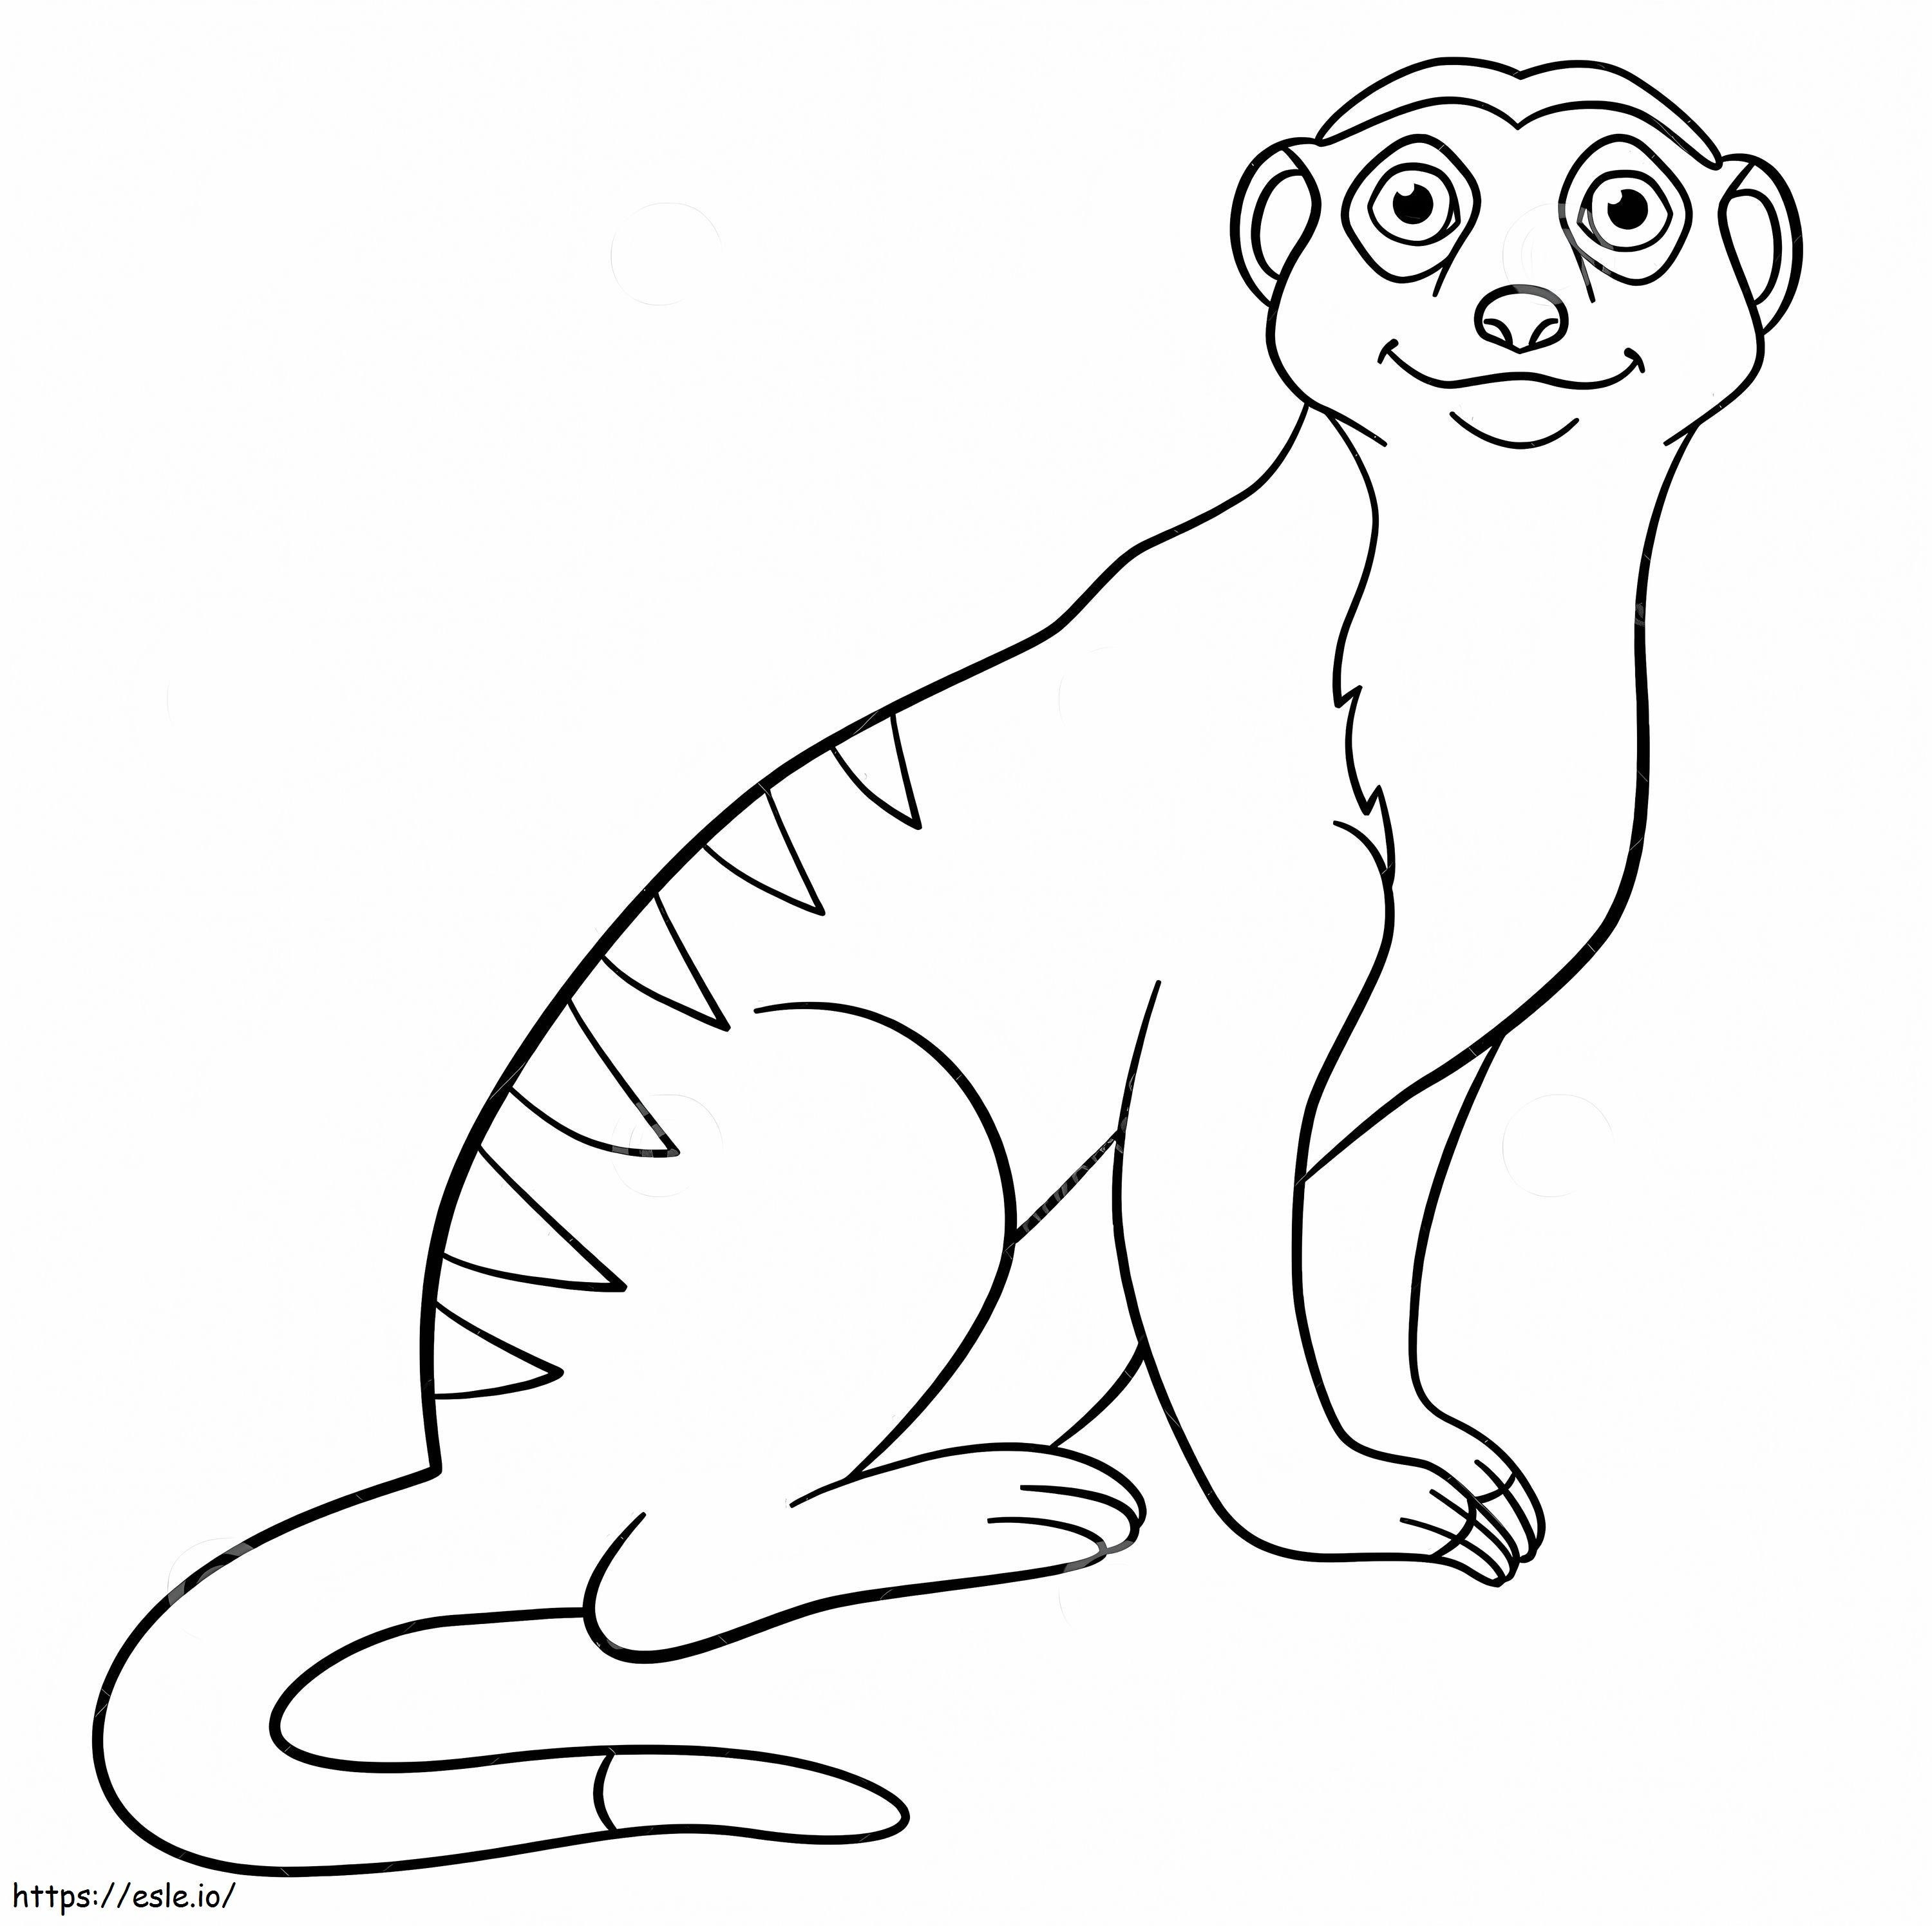 Meerkat Smiling coloring page